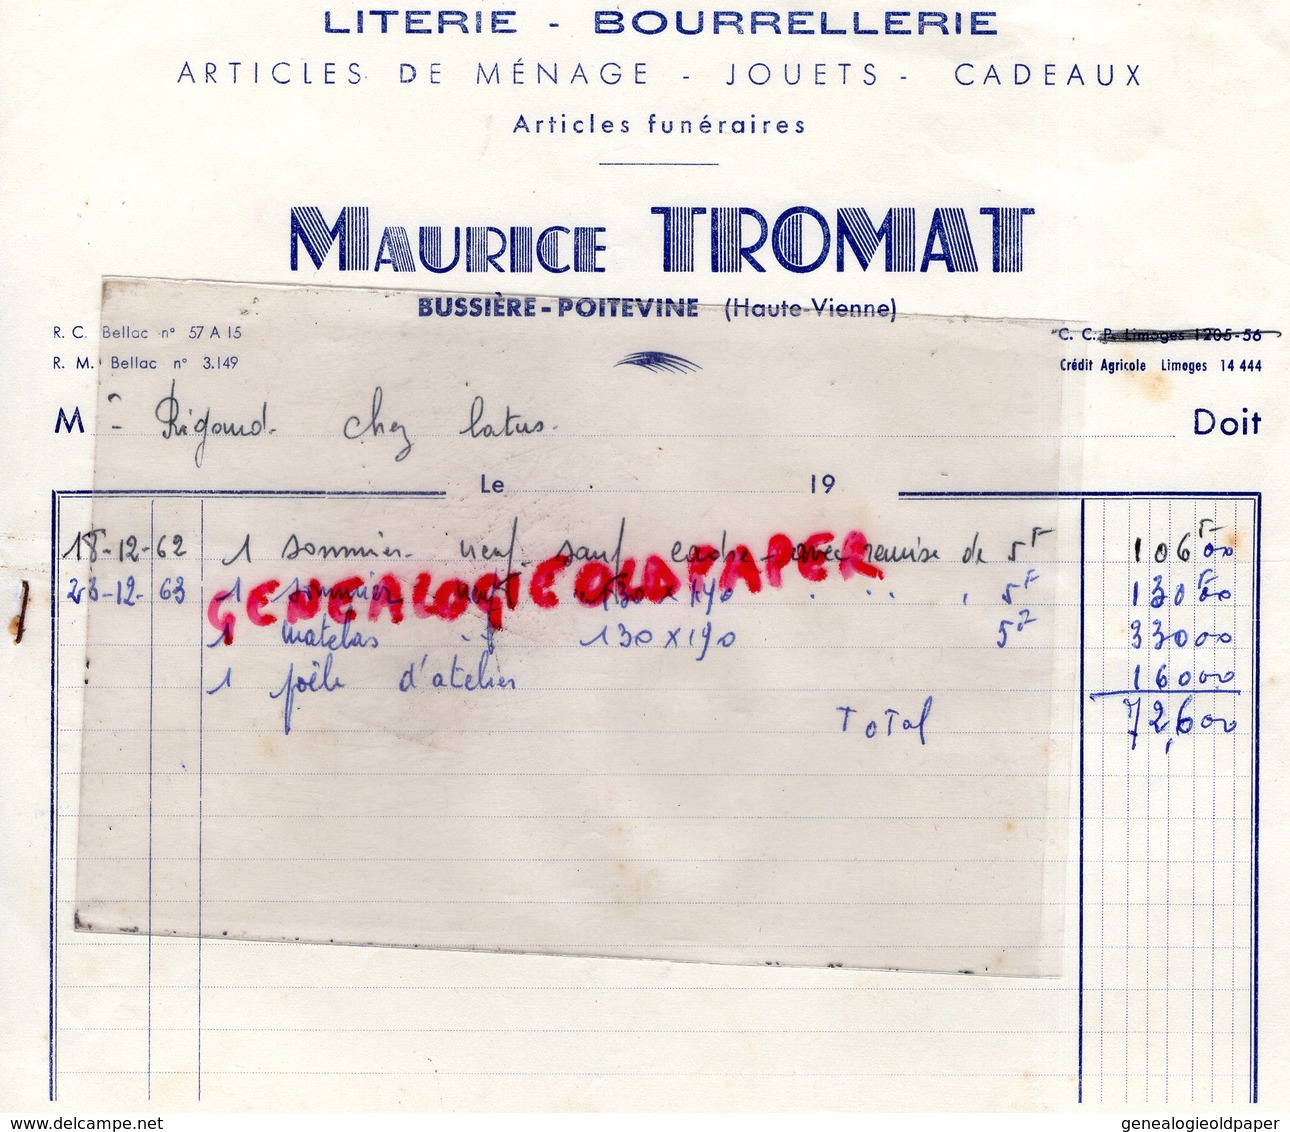 87 - BUSSIERE POITEVINE- RARE FACTURE MAURICE TROMAT- LITERIE BOURRELLERIE - BOURELIER  1962 - Old Professions